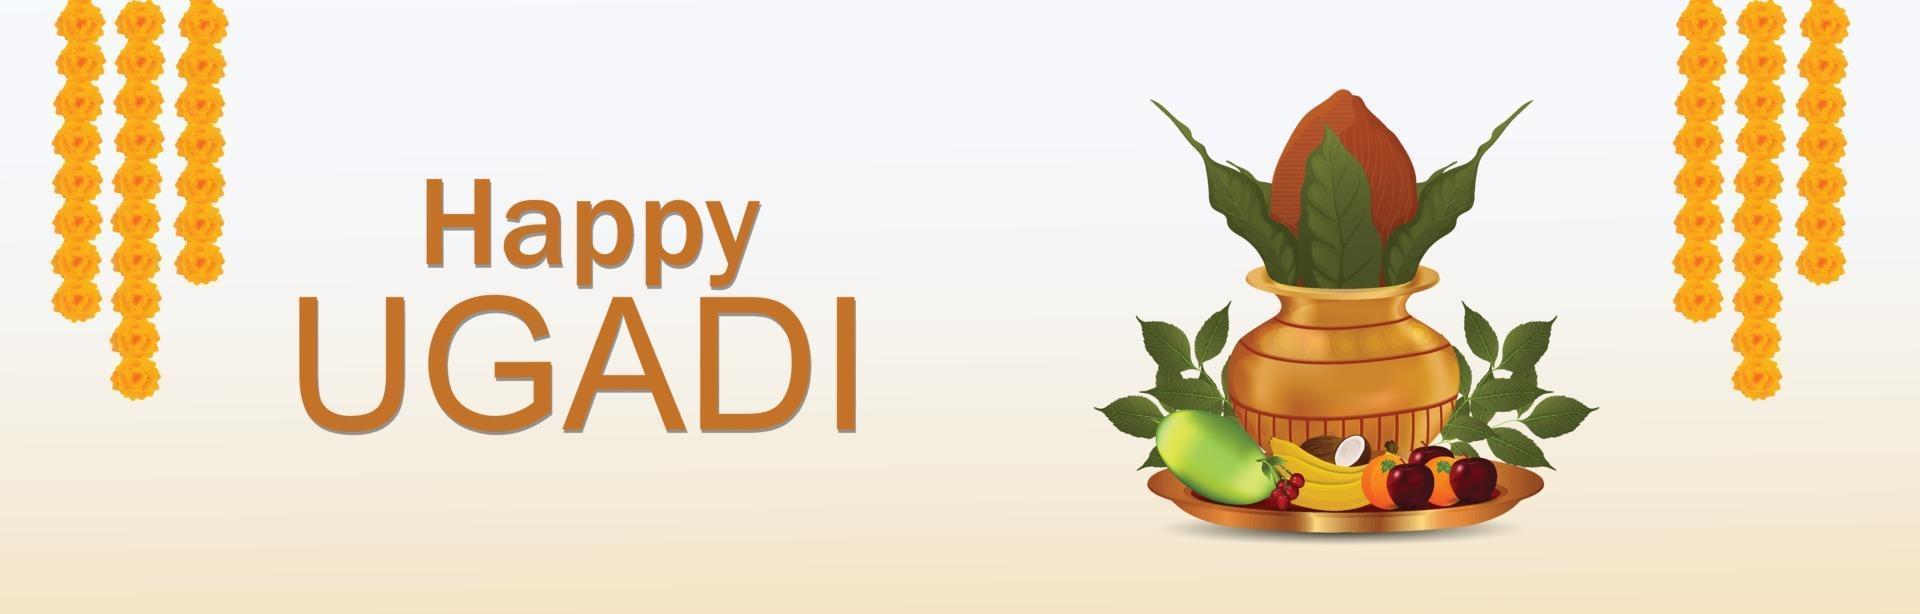 Happy ugadi celebration background with golden creative kalash vector